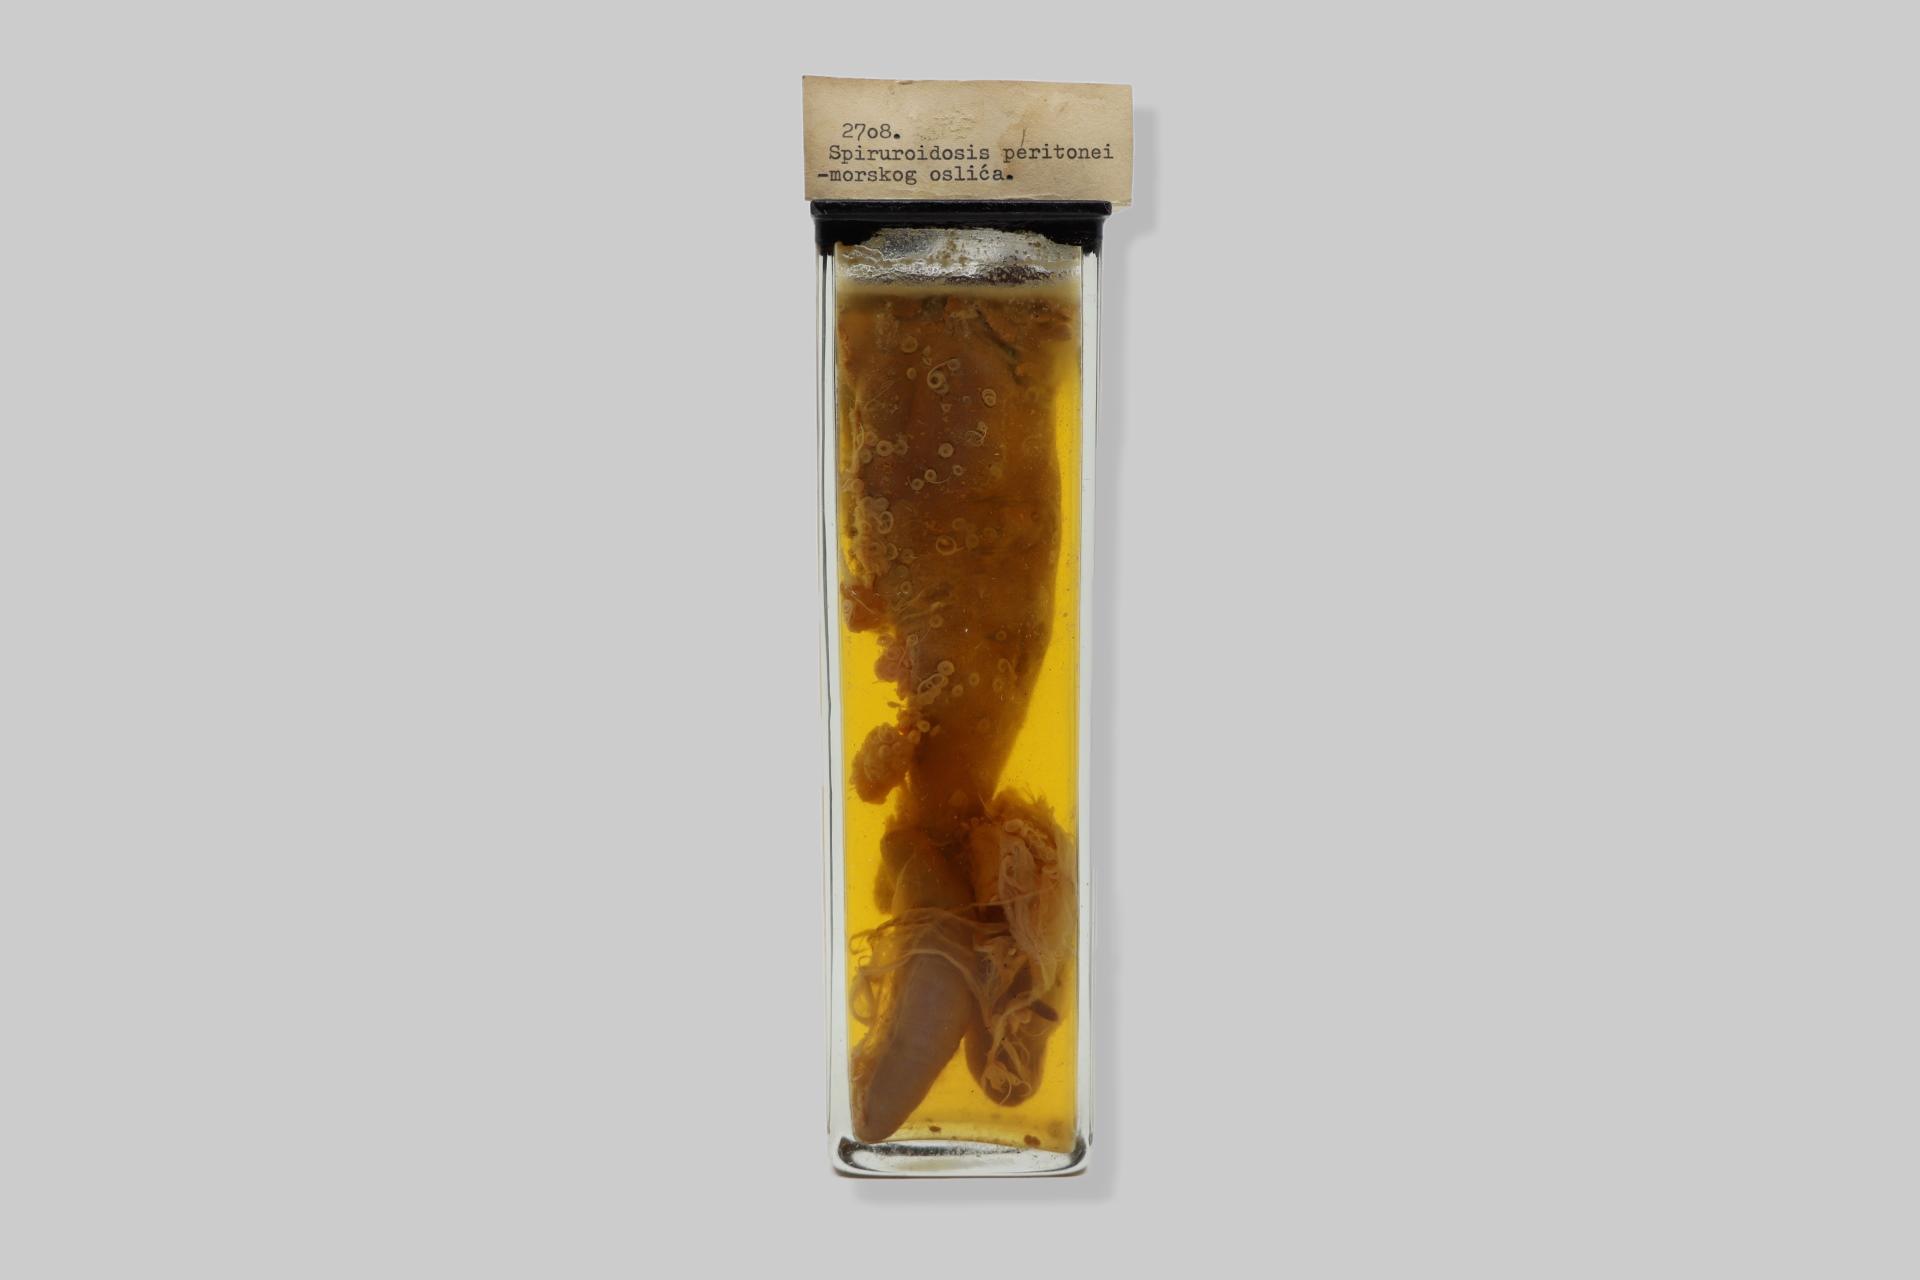 Spiruroidosis peritonei- morskog oslića